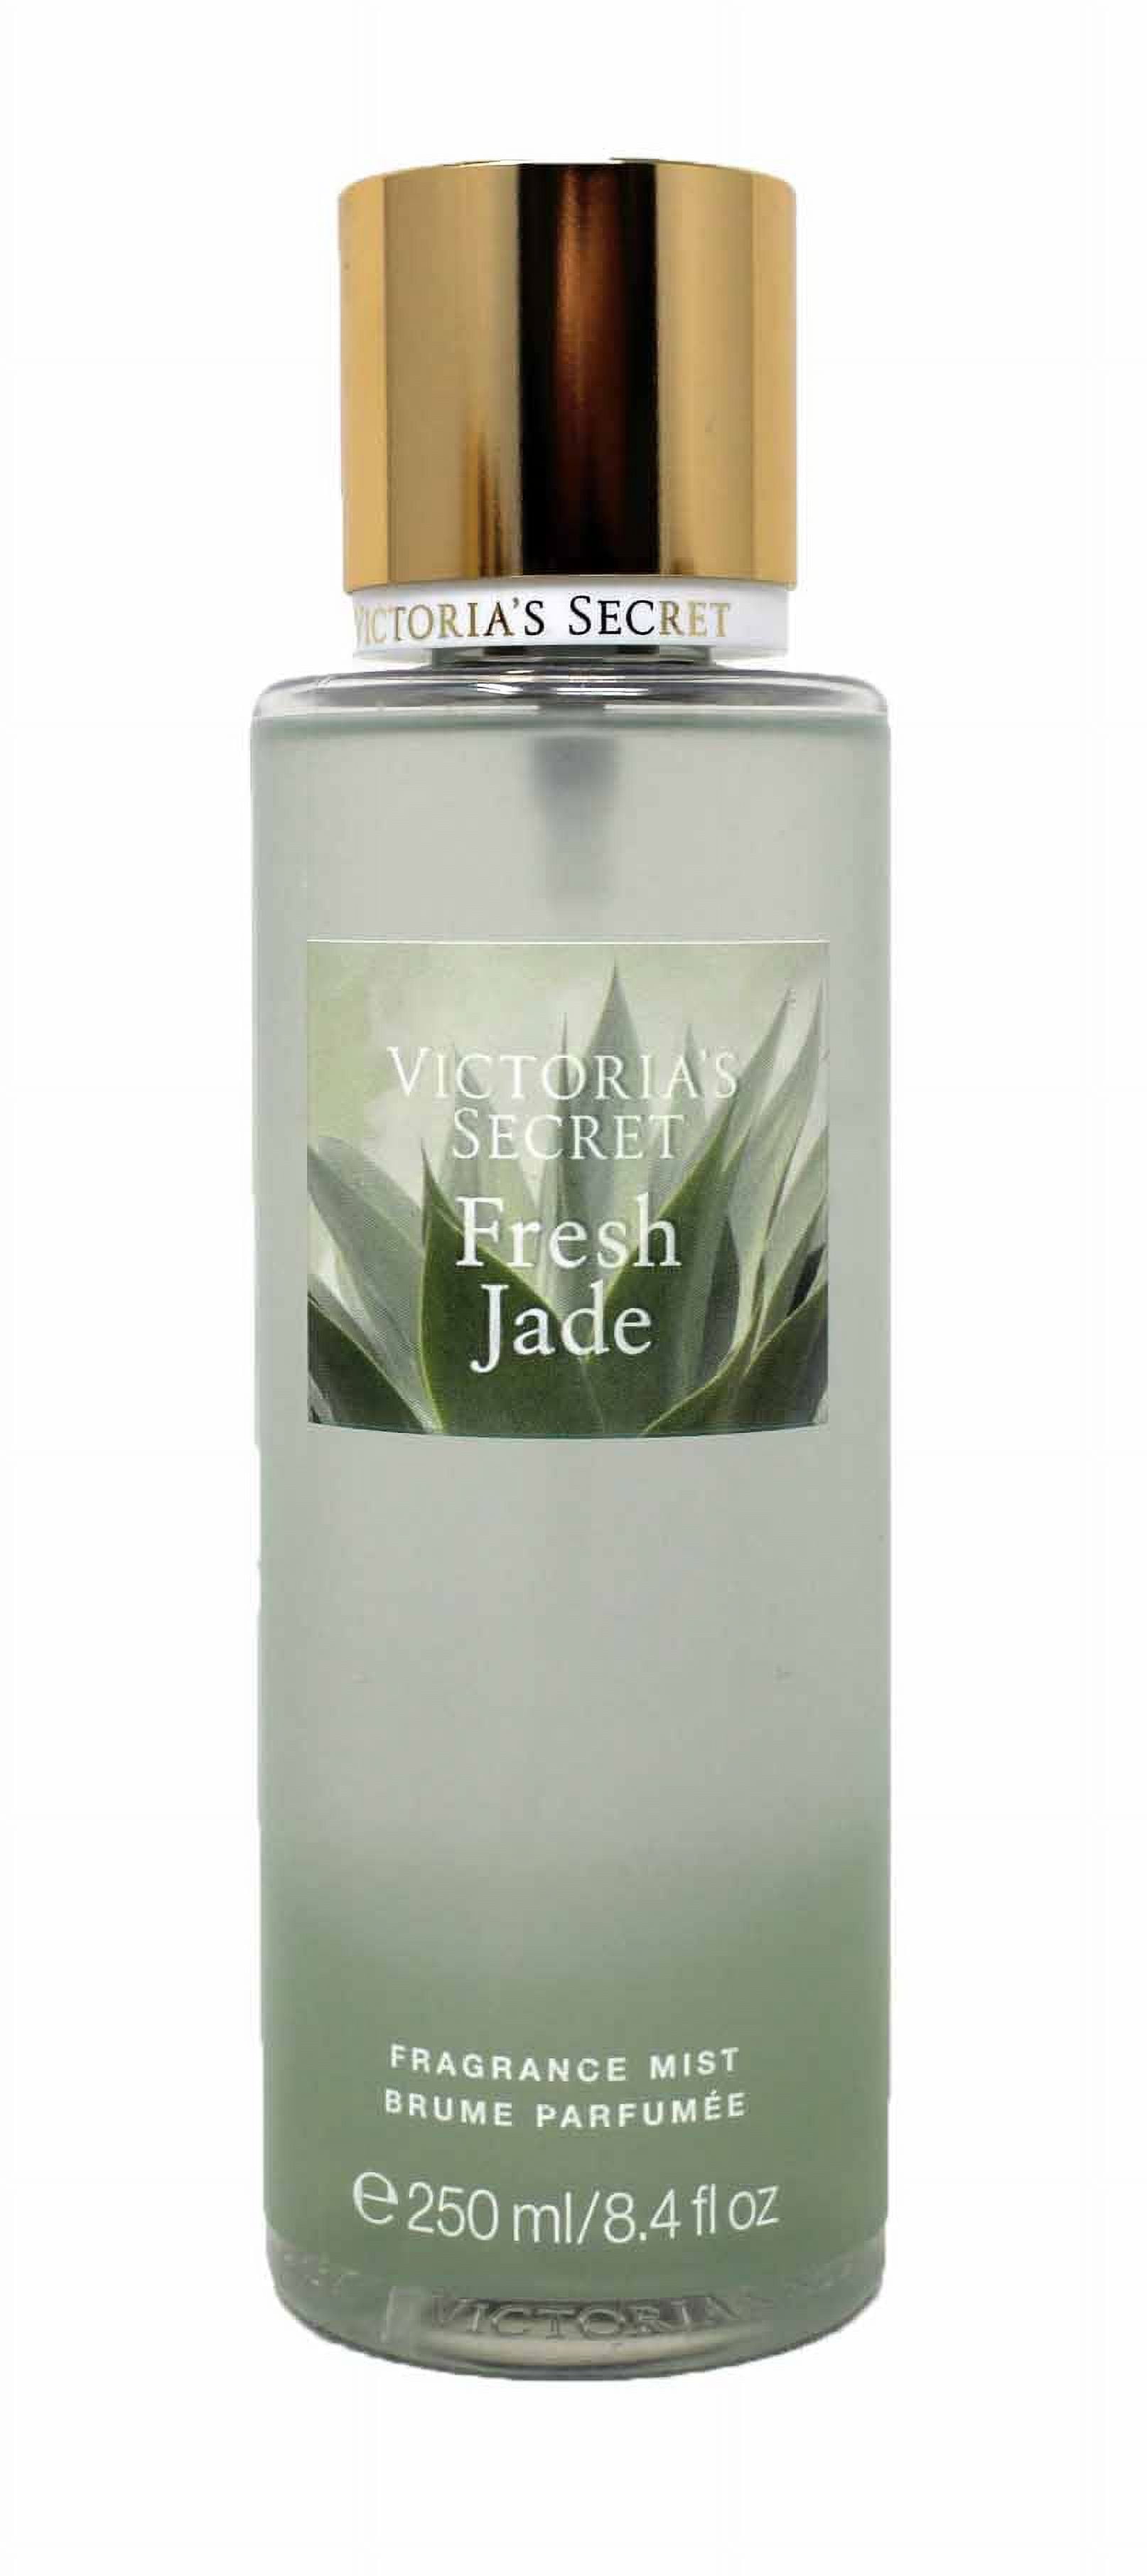 New Brume parfumée FRESH JADE Victoria's Secret fragrance Mist US